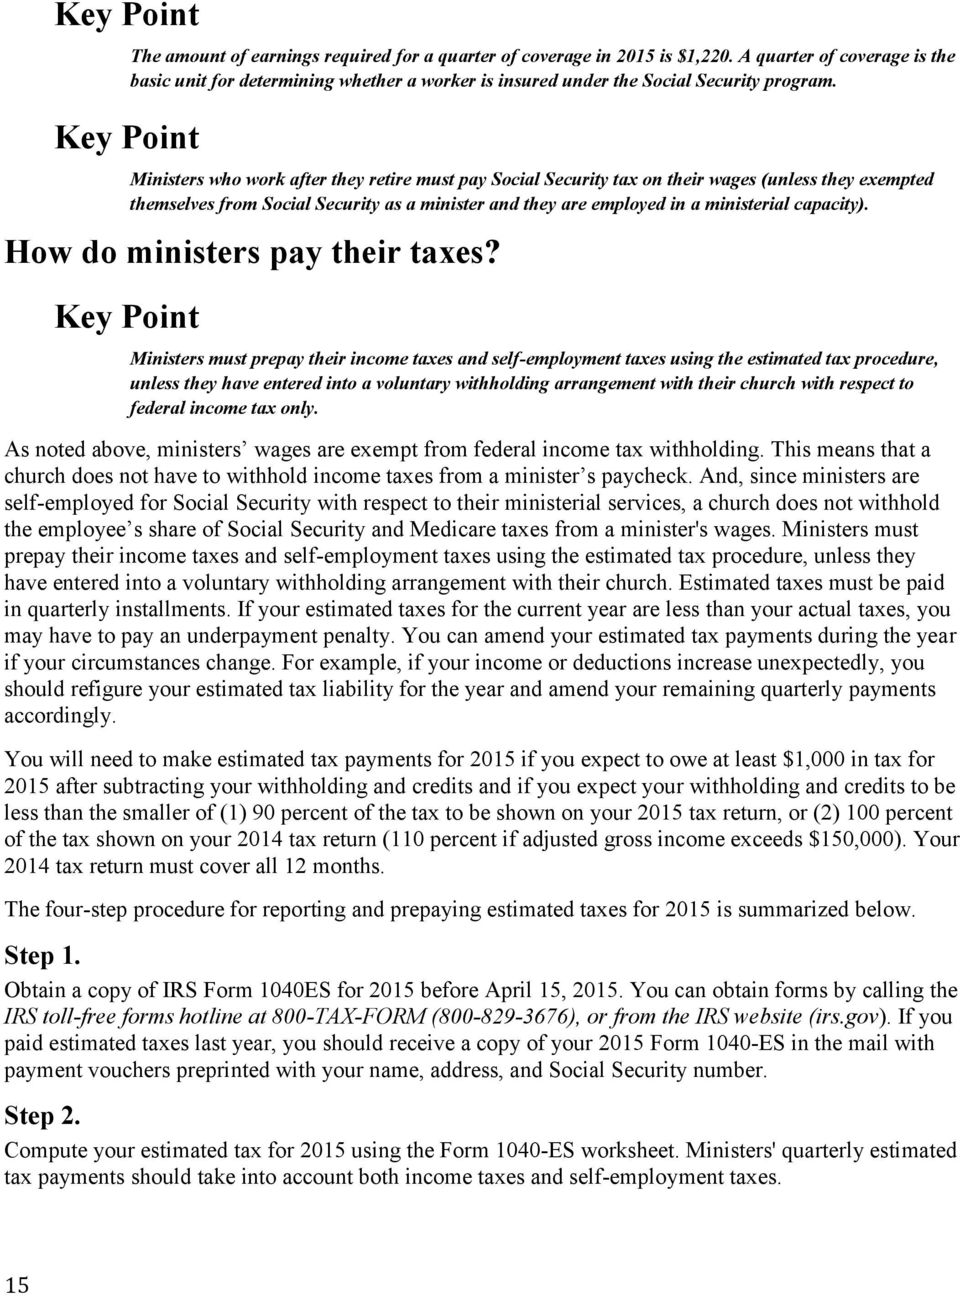 How do ministers pay their taxes?